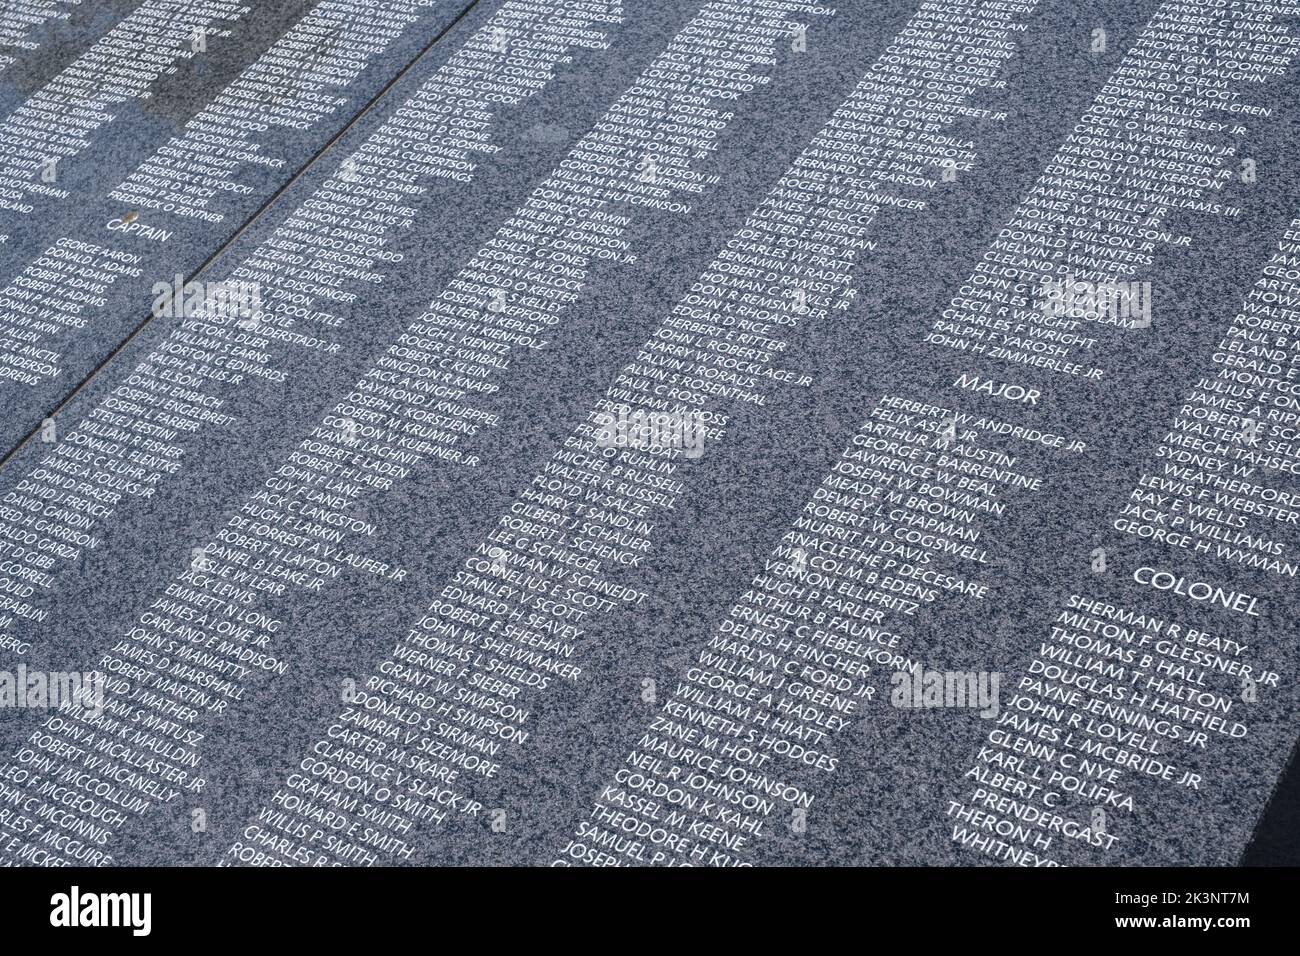 Korean War Memorial, Wall of Remembrance Containing Names of American and Korean Augmentation Forces Dead, Washington, DC, USA. More than 43,000 names Stock Photo